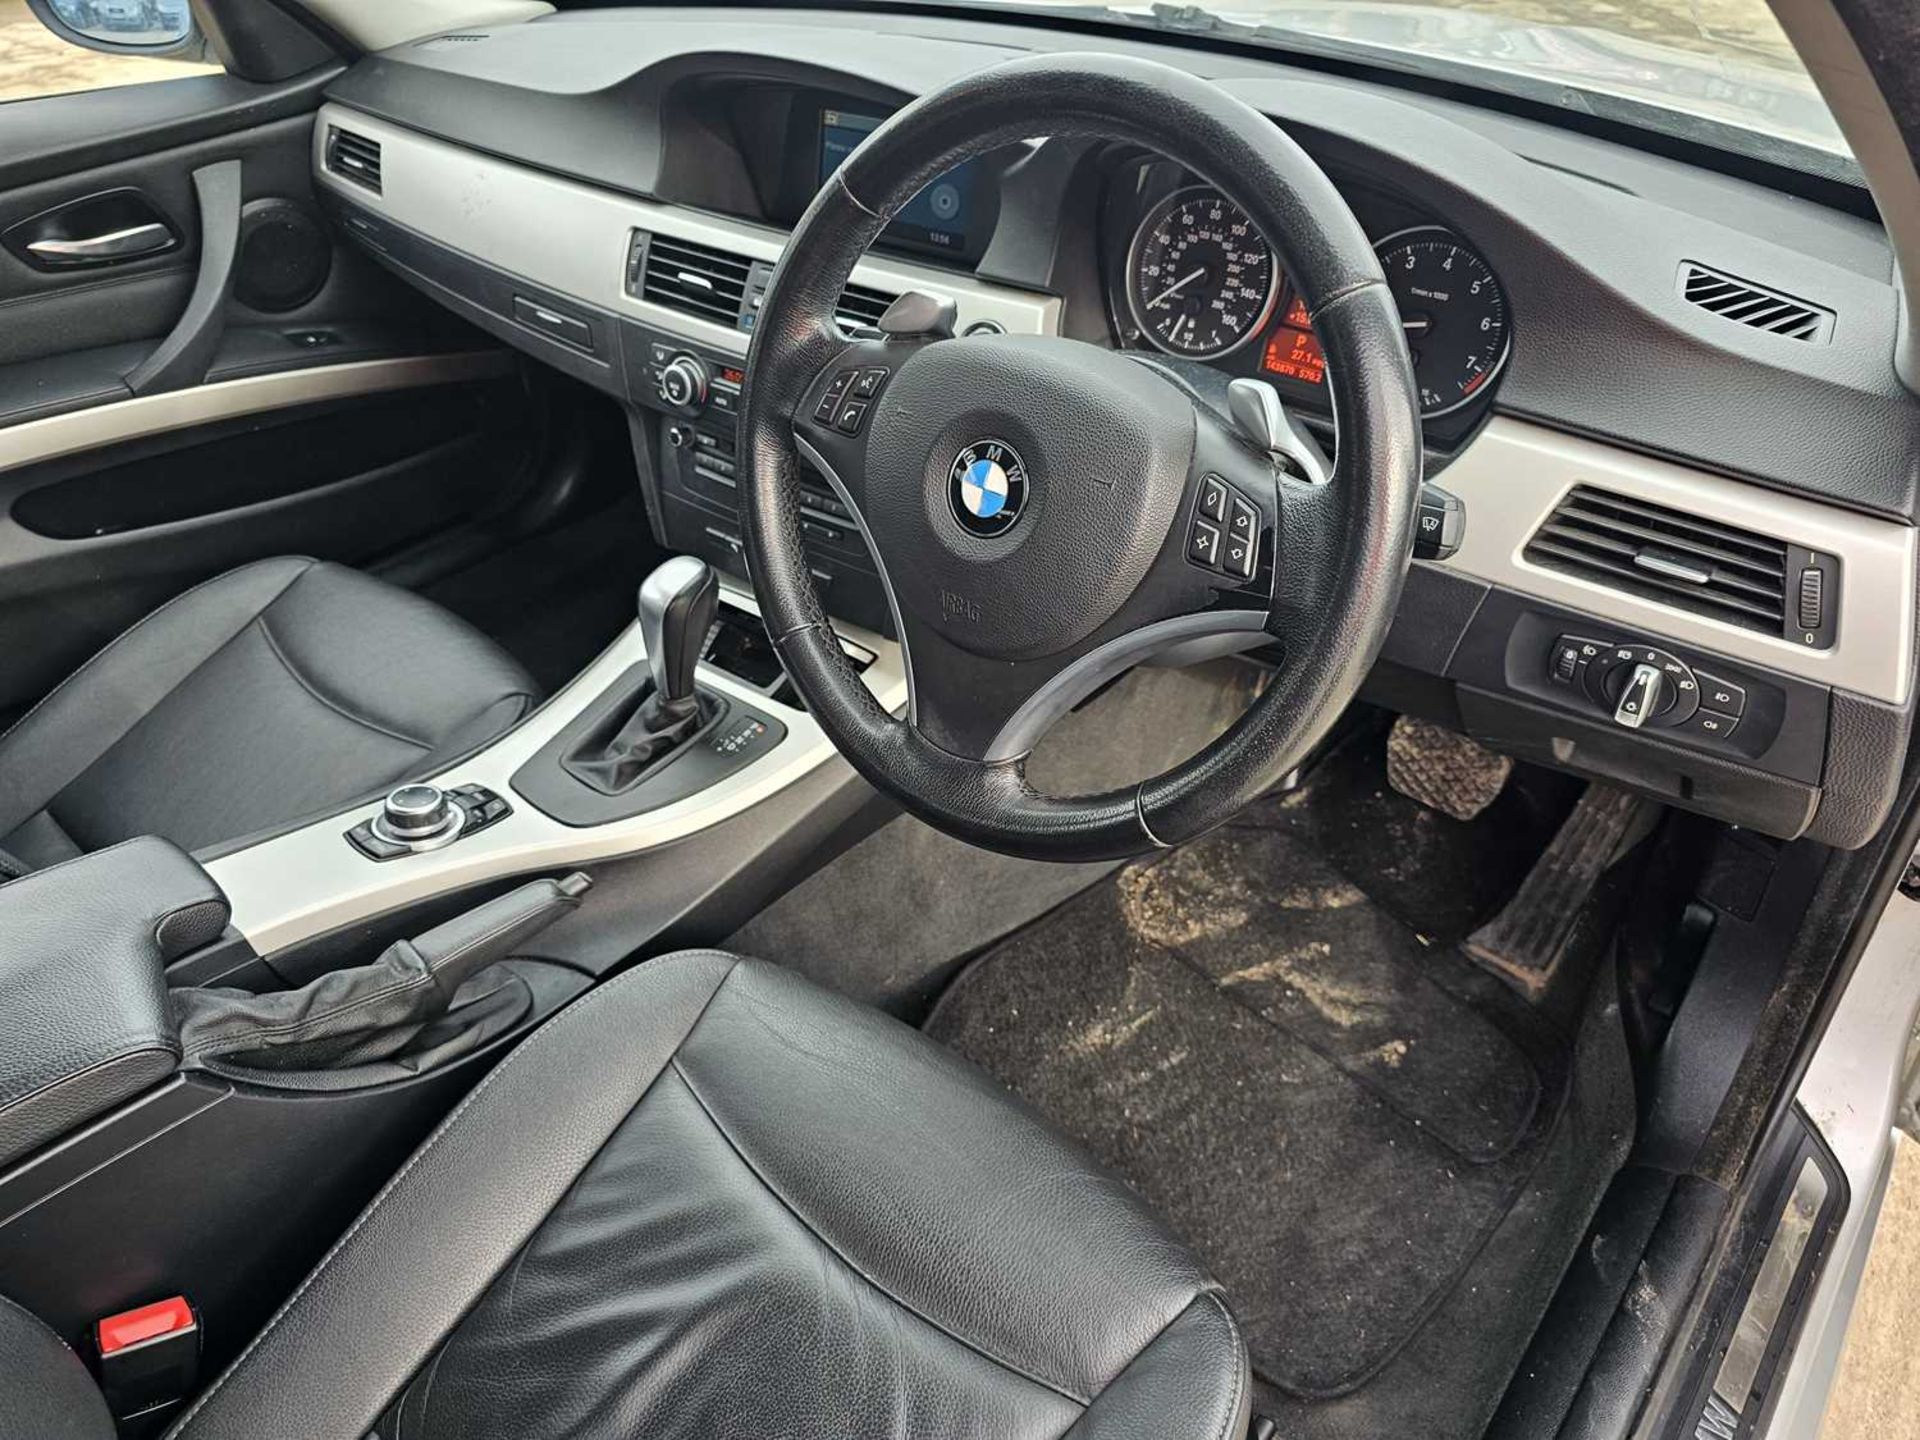 2009 BMW 325i Estate, Auto, Paddle Shift, Parking Sensors, Full Leather, Bluetooth, Cruise Control,  - Image 19 of 28